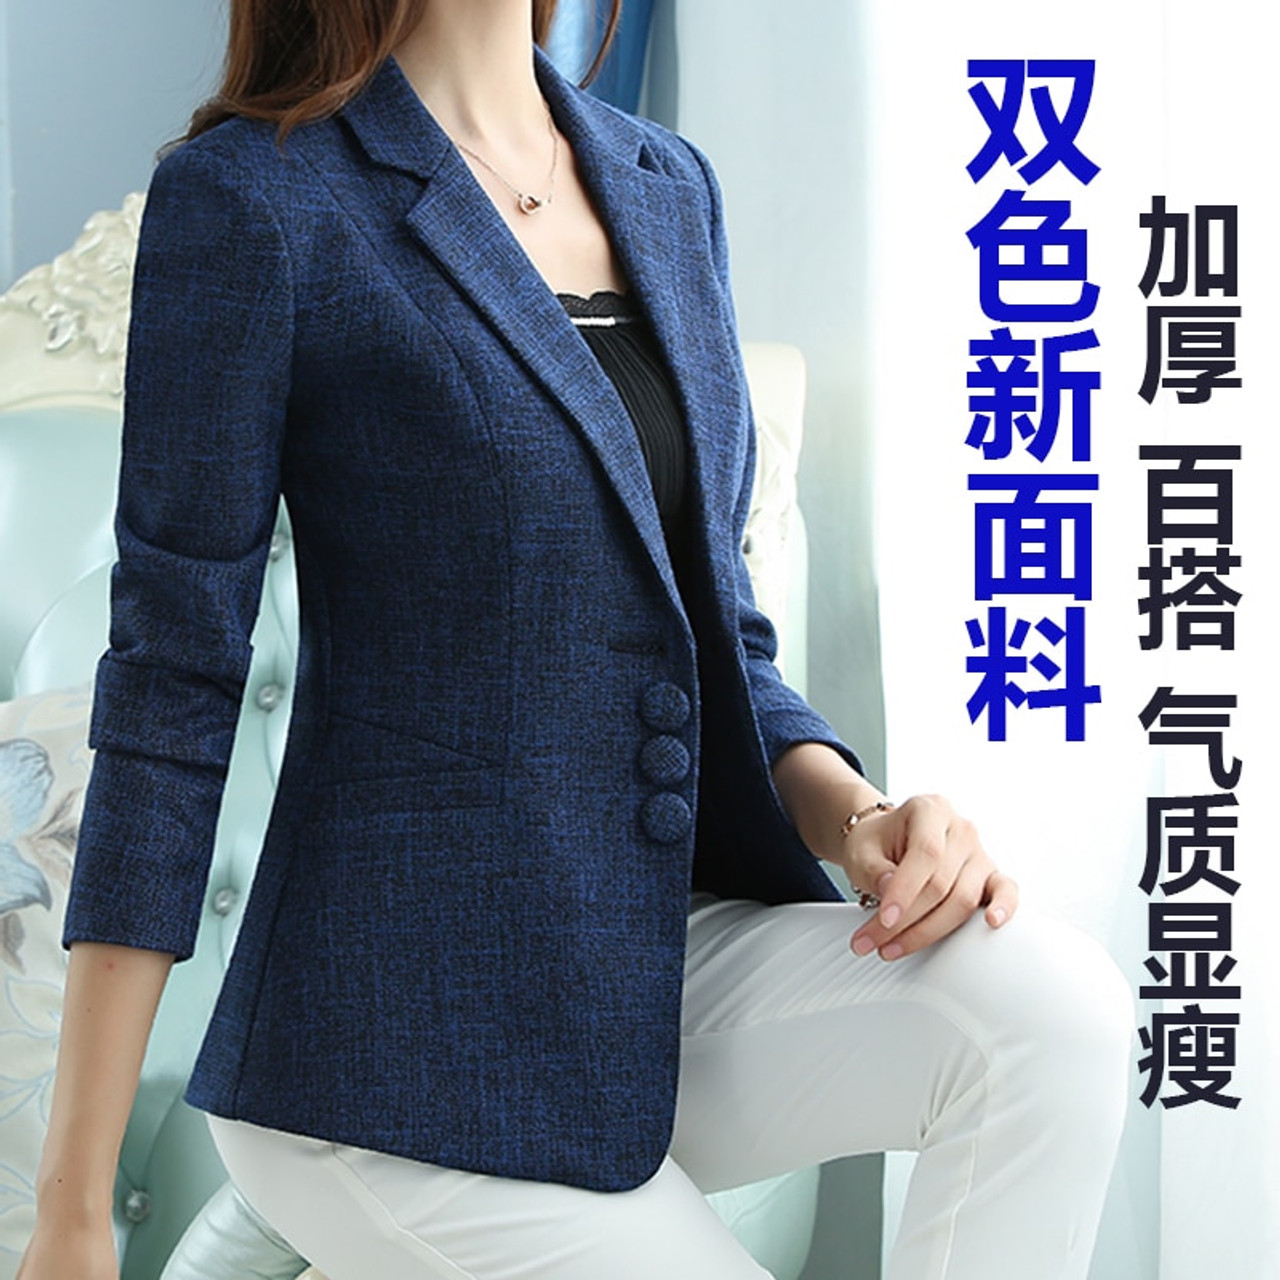 The New high quality Autumn Spring Women s Blazer Elegant fashion Lady Blazers Coat Suits Female 86279.1580375378